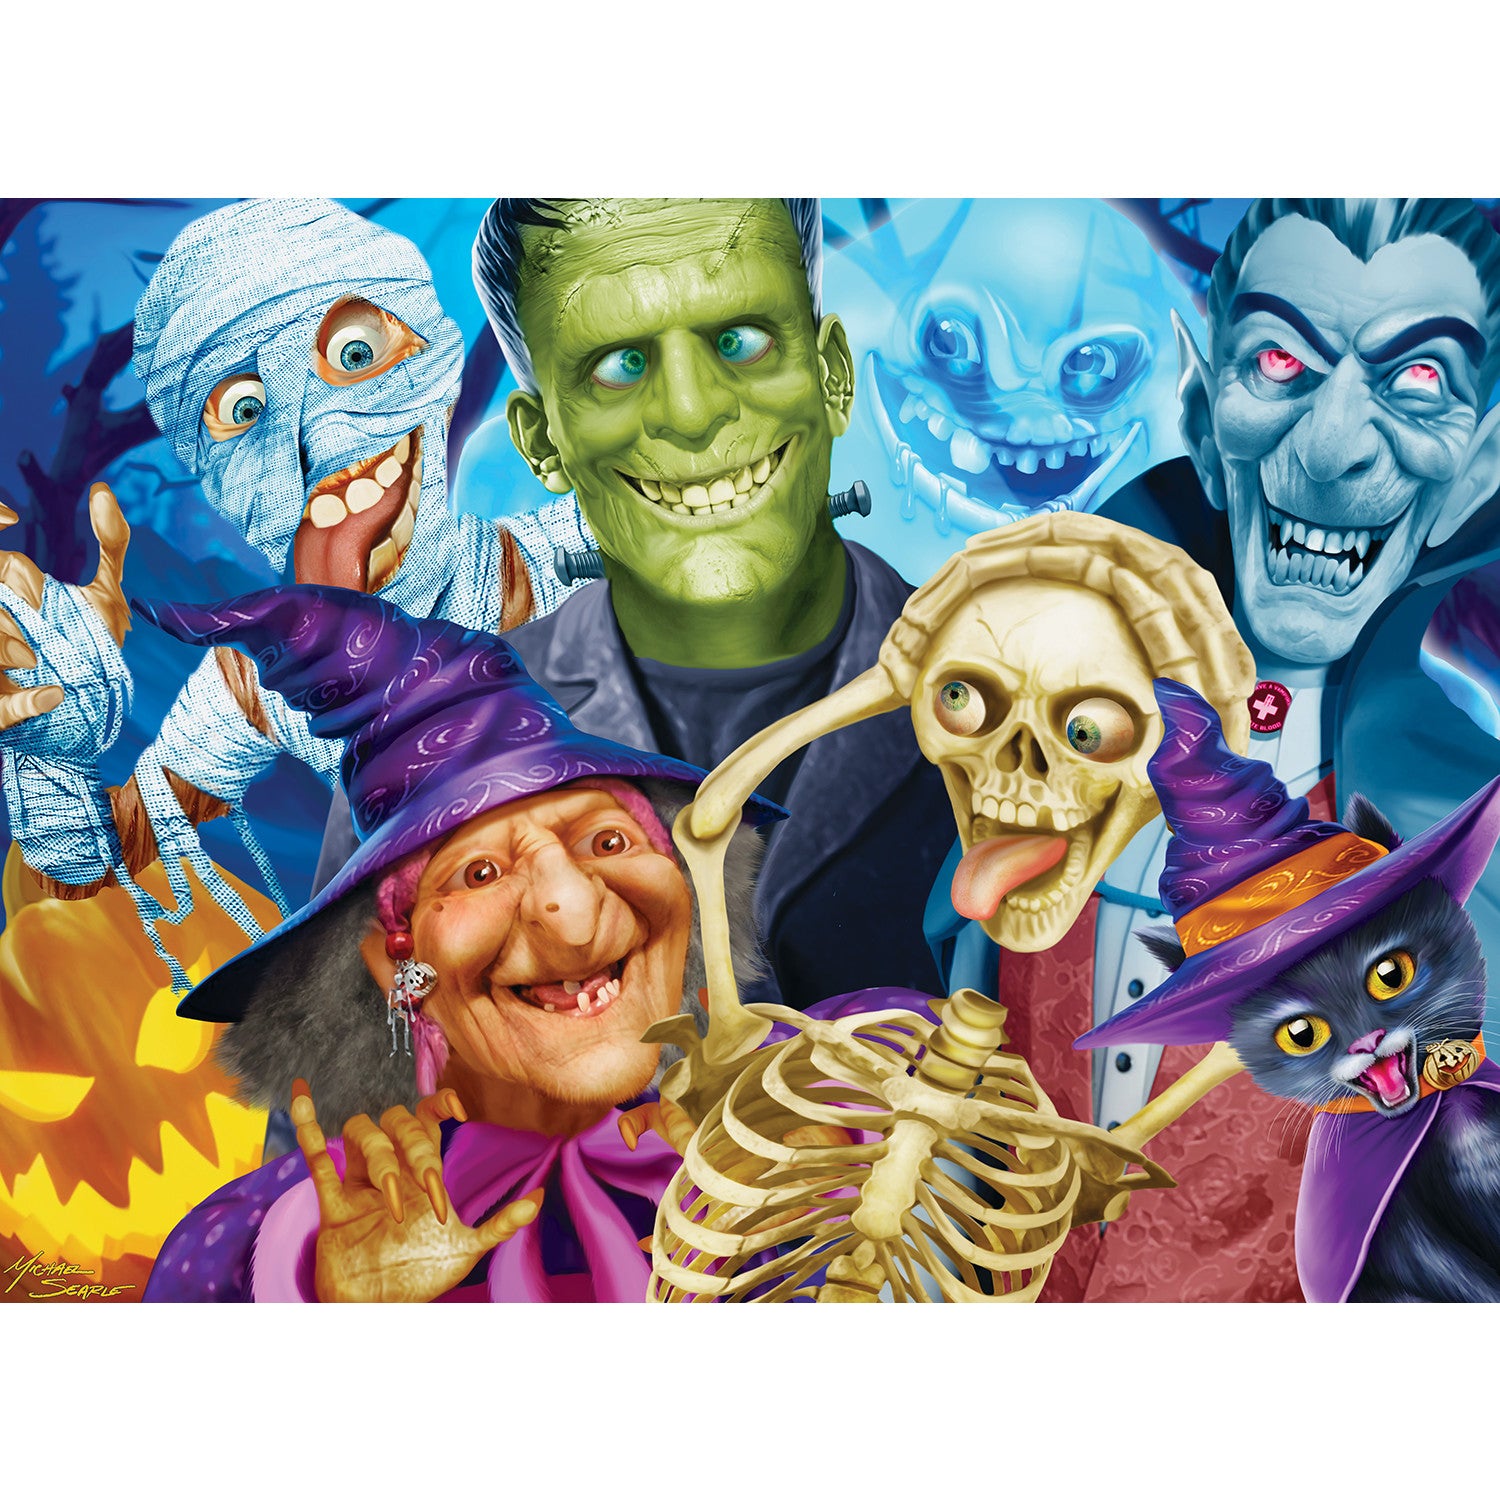 Selfies - Spooky Smiles 200 Piece Halloween Puzzle